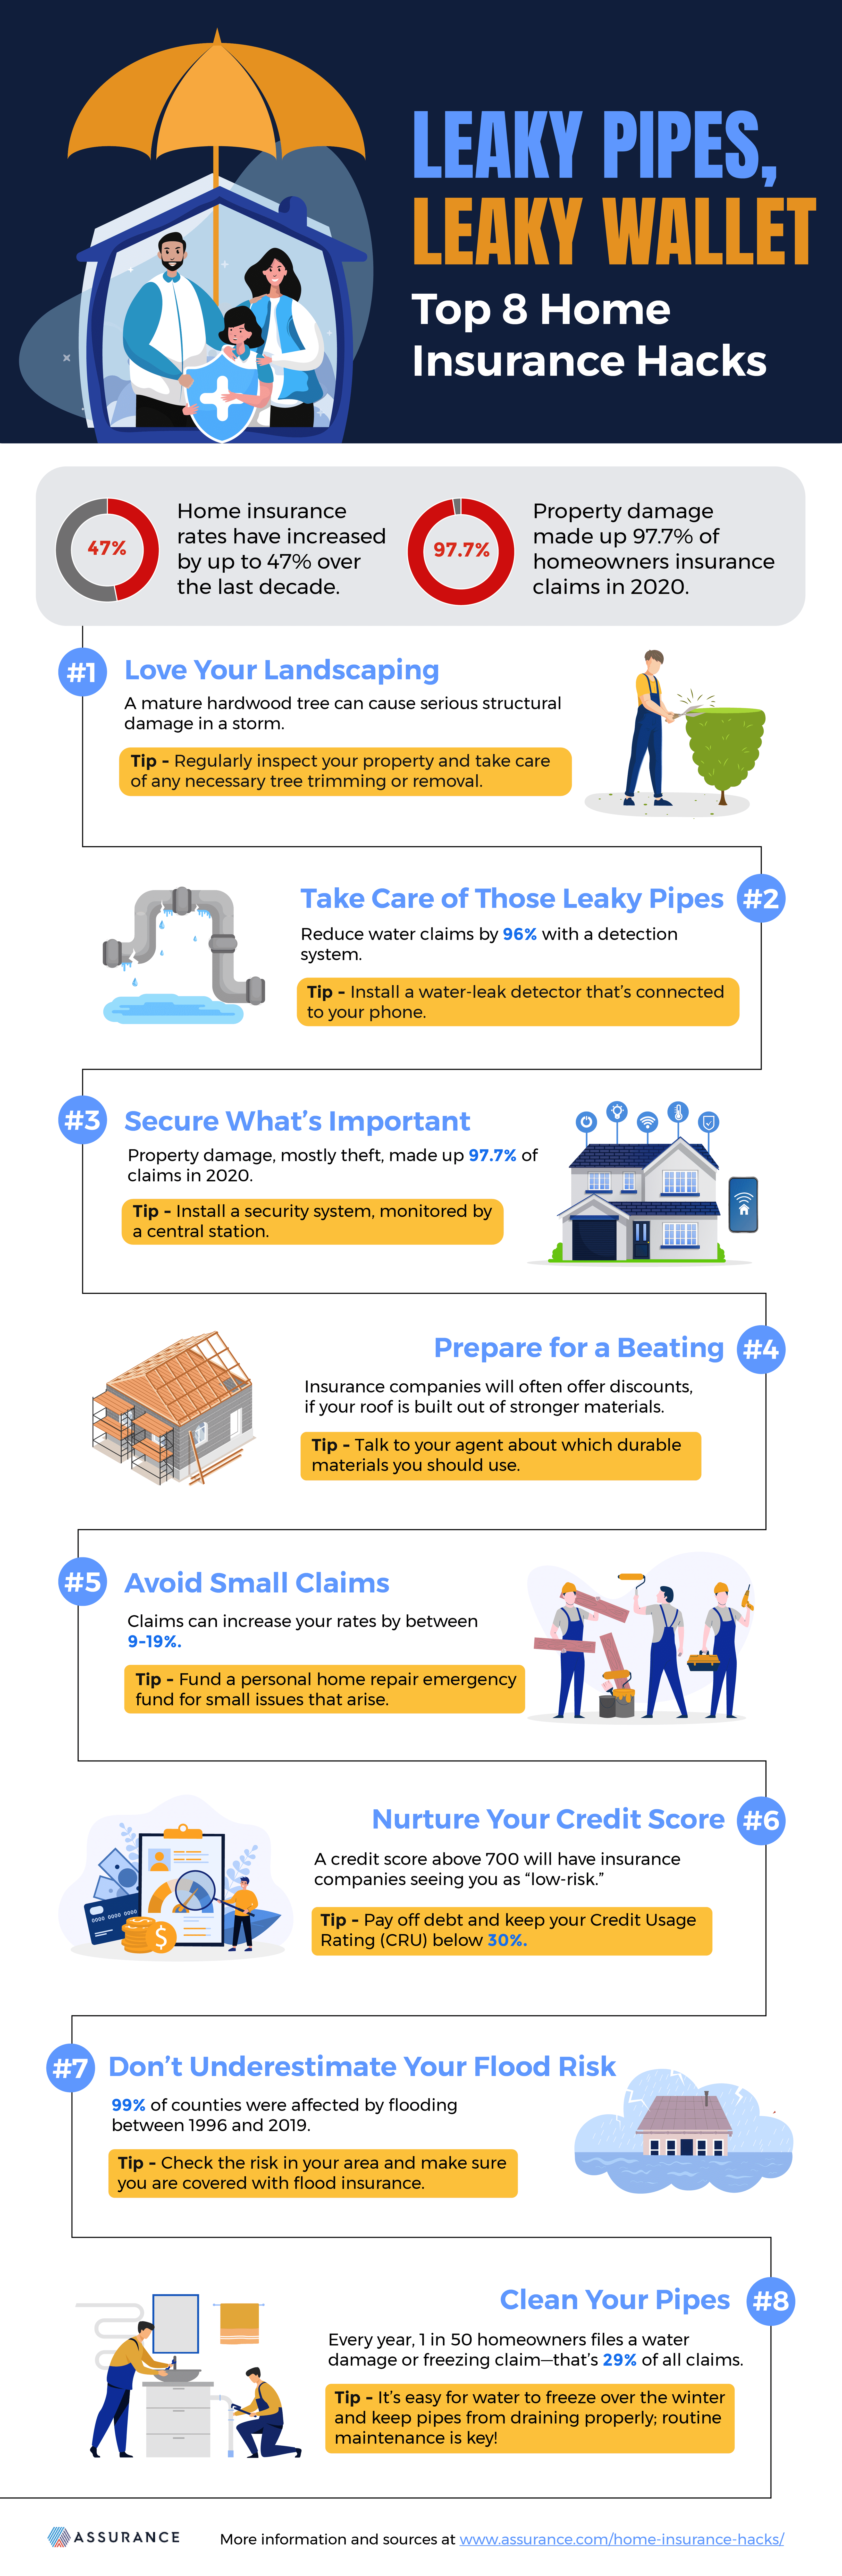 Top 8 Home Insurance Hacks